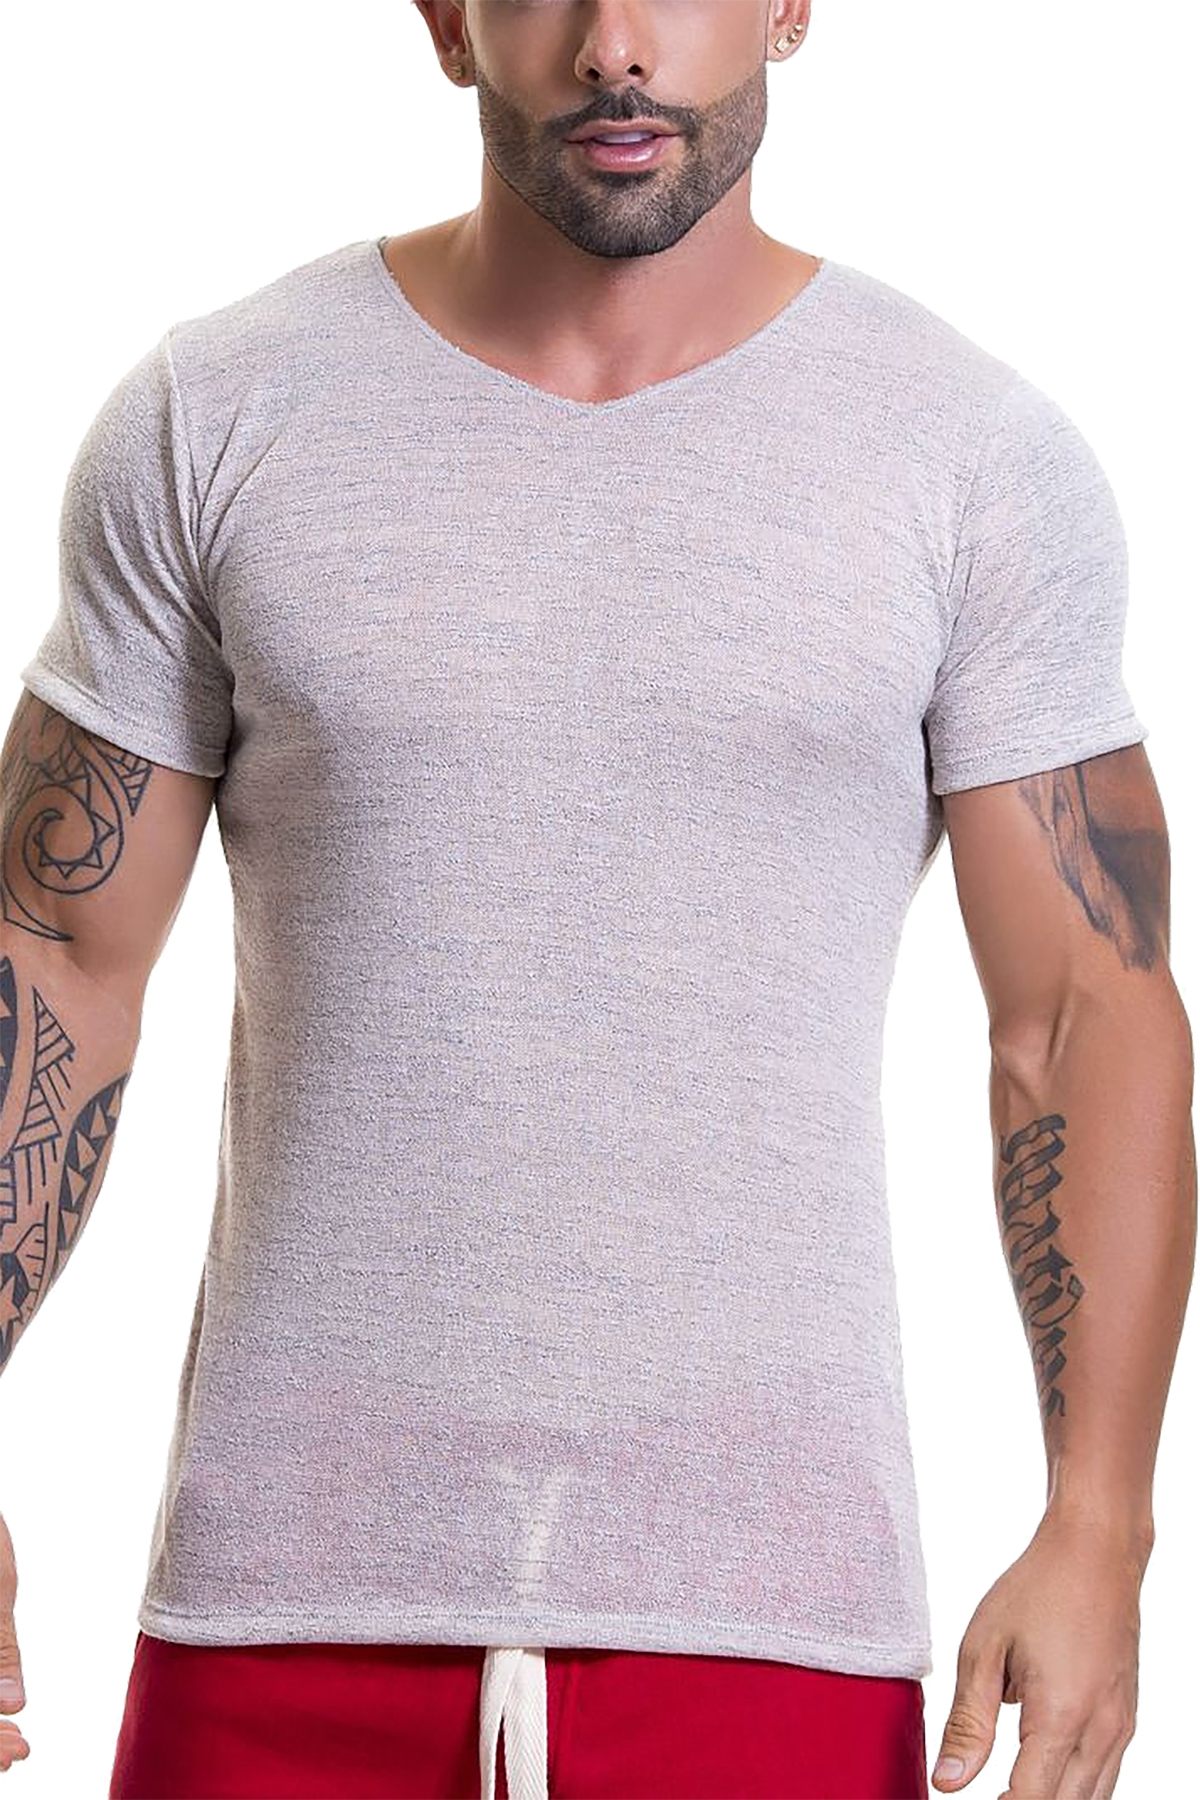 Jor Grey Maui Sheer T-Shirt